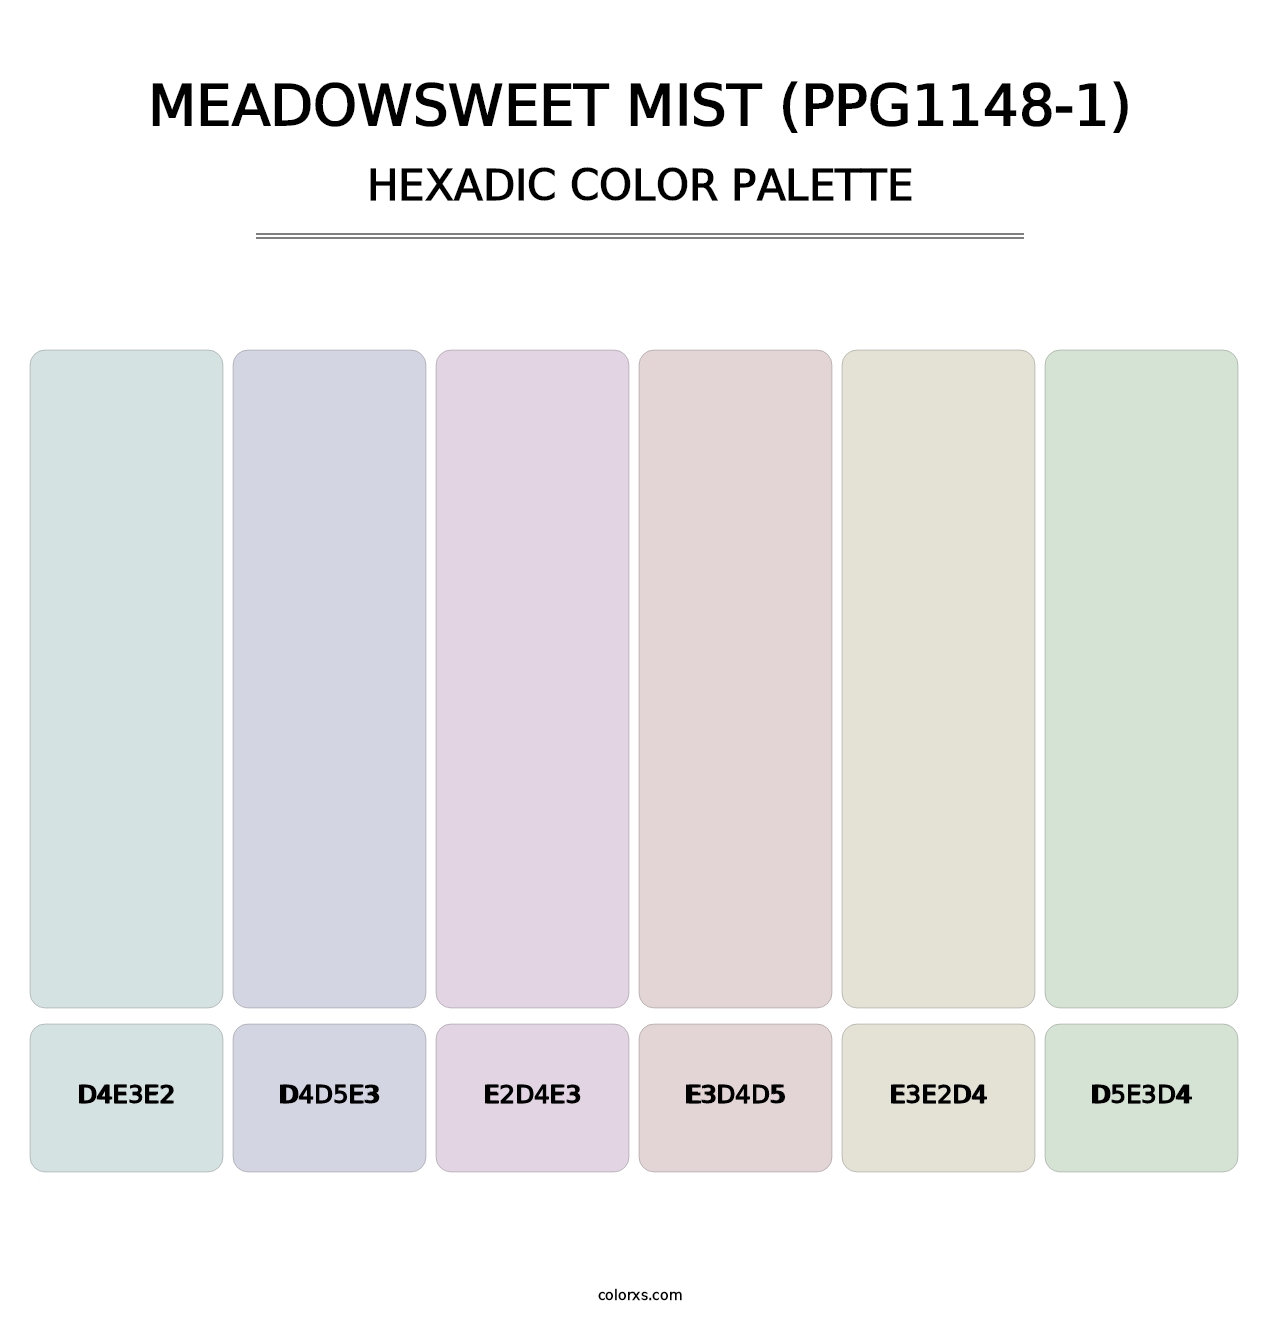 Meadowsweet Mist (PPG1148-1) - Hexadic Color Palette